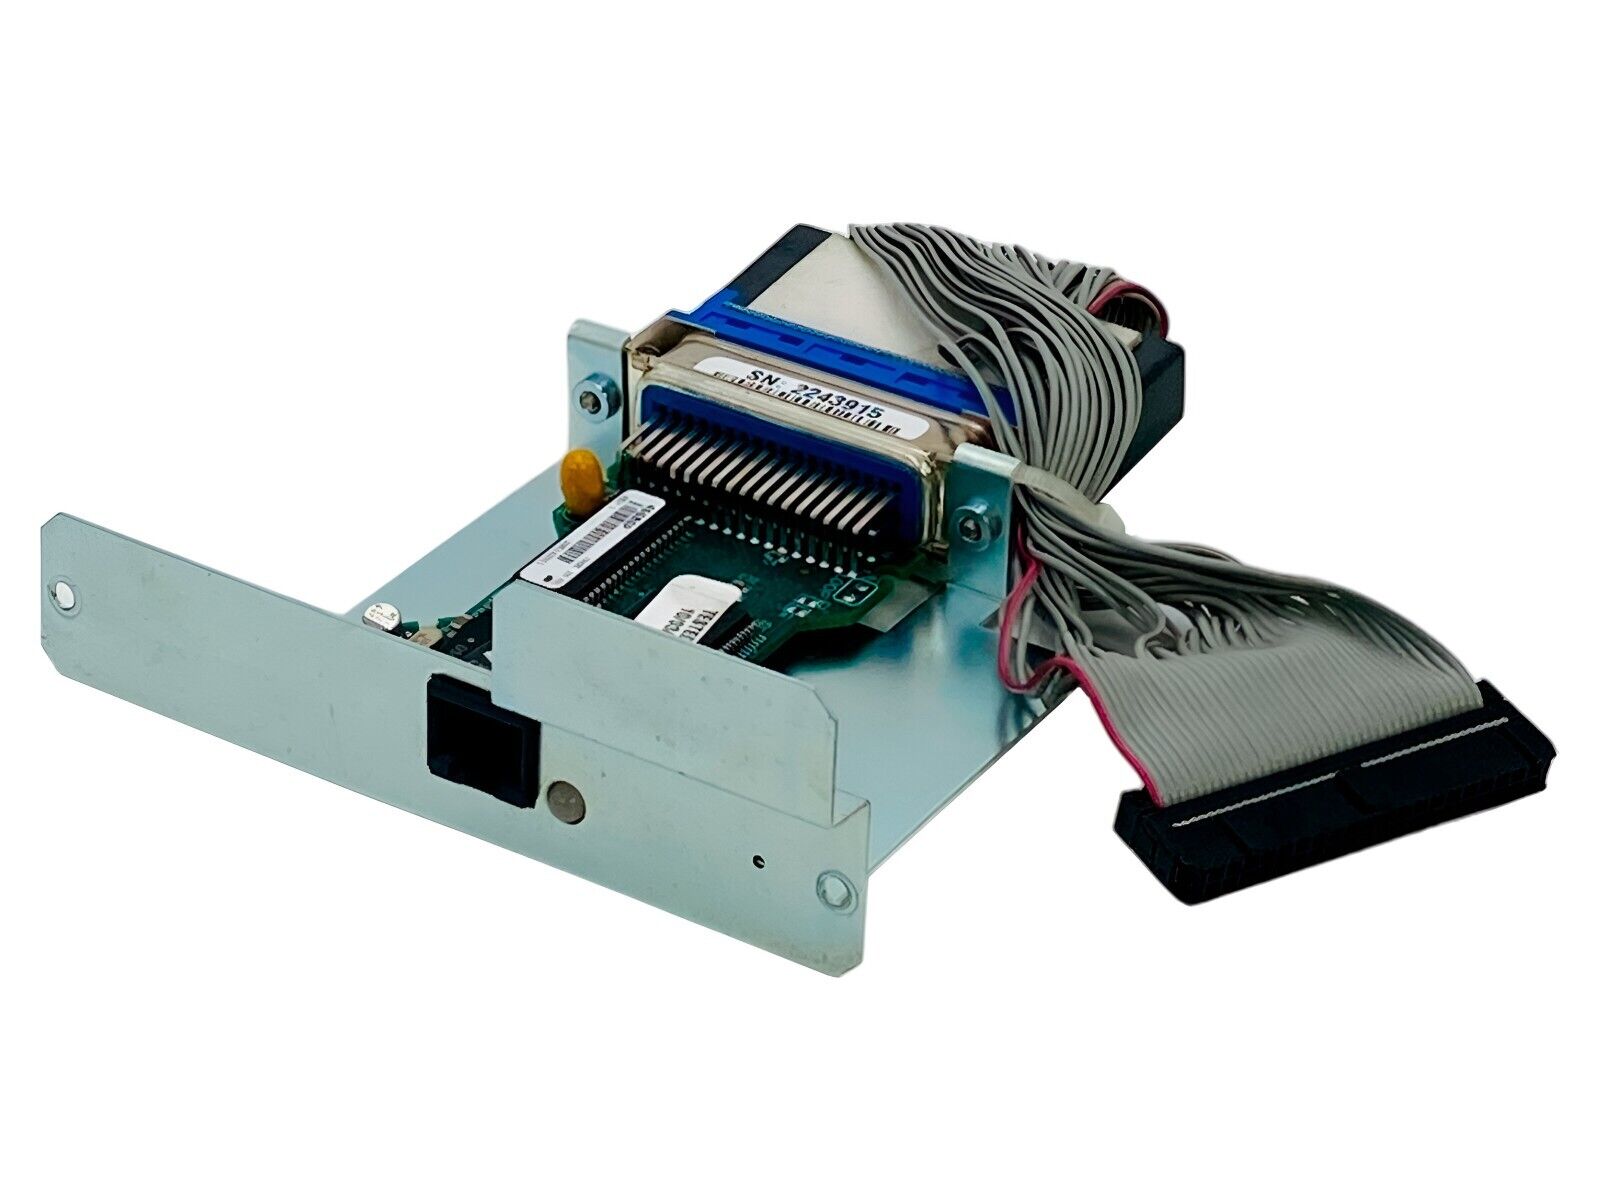 Genuine MagJack SI-20144 Network Interface Card for Zebra Label Printers